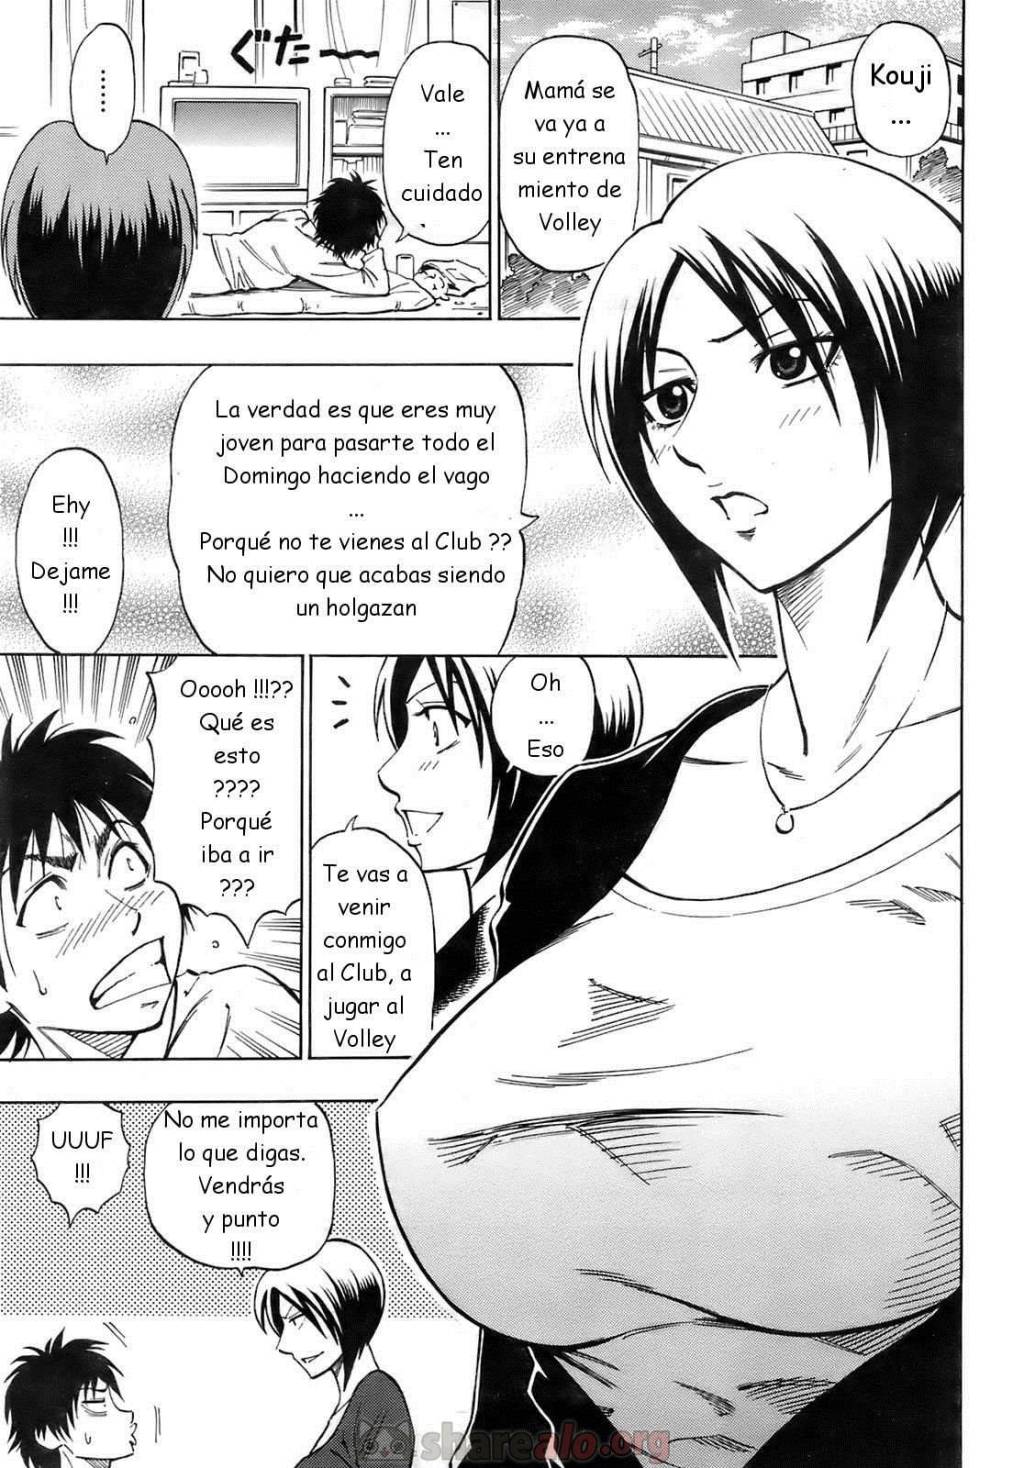 Mama 3 Volley - 4 - Comics Porno - Hentai Manga - Cartoon XXX